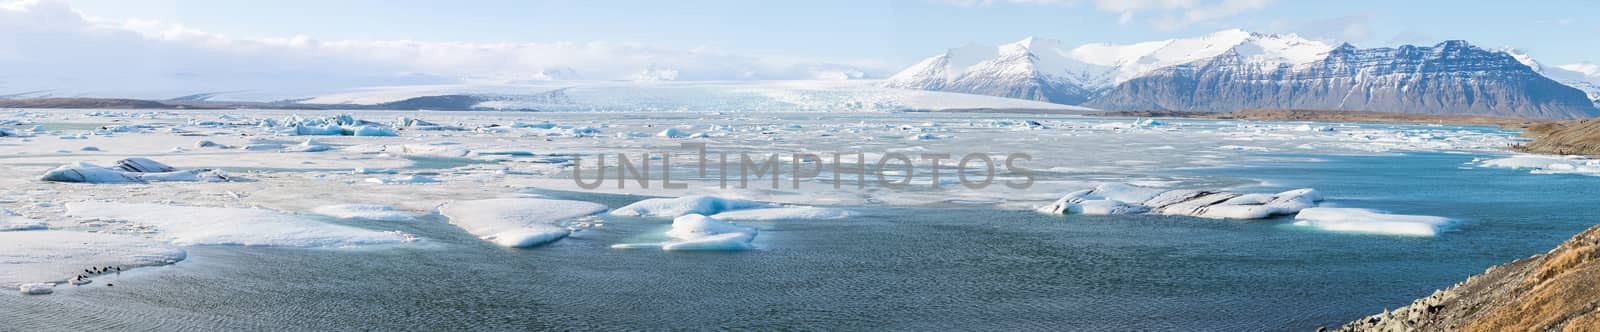 Vatnajokull Glacier Iceland by vichie81